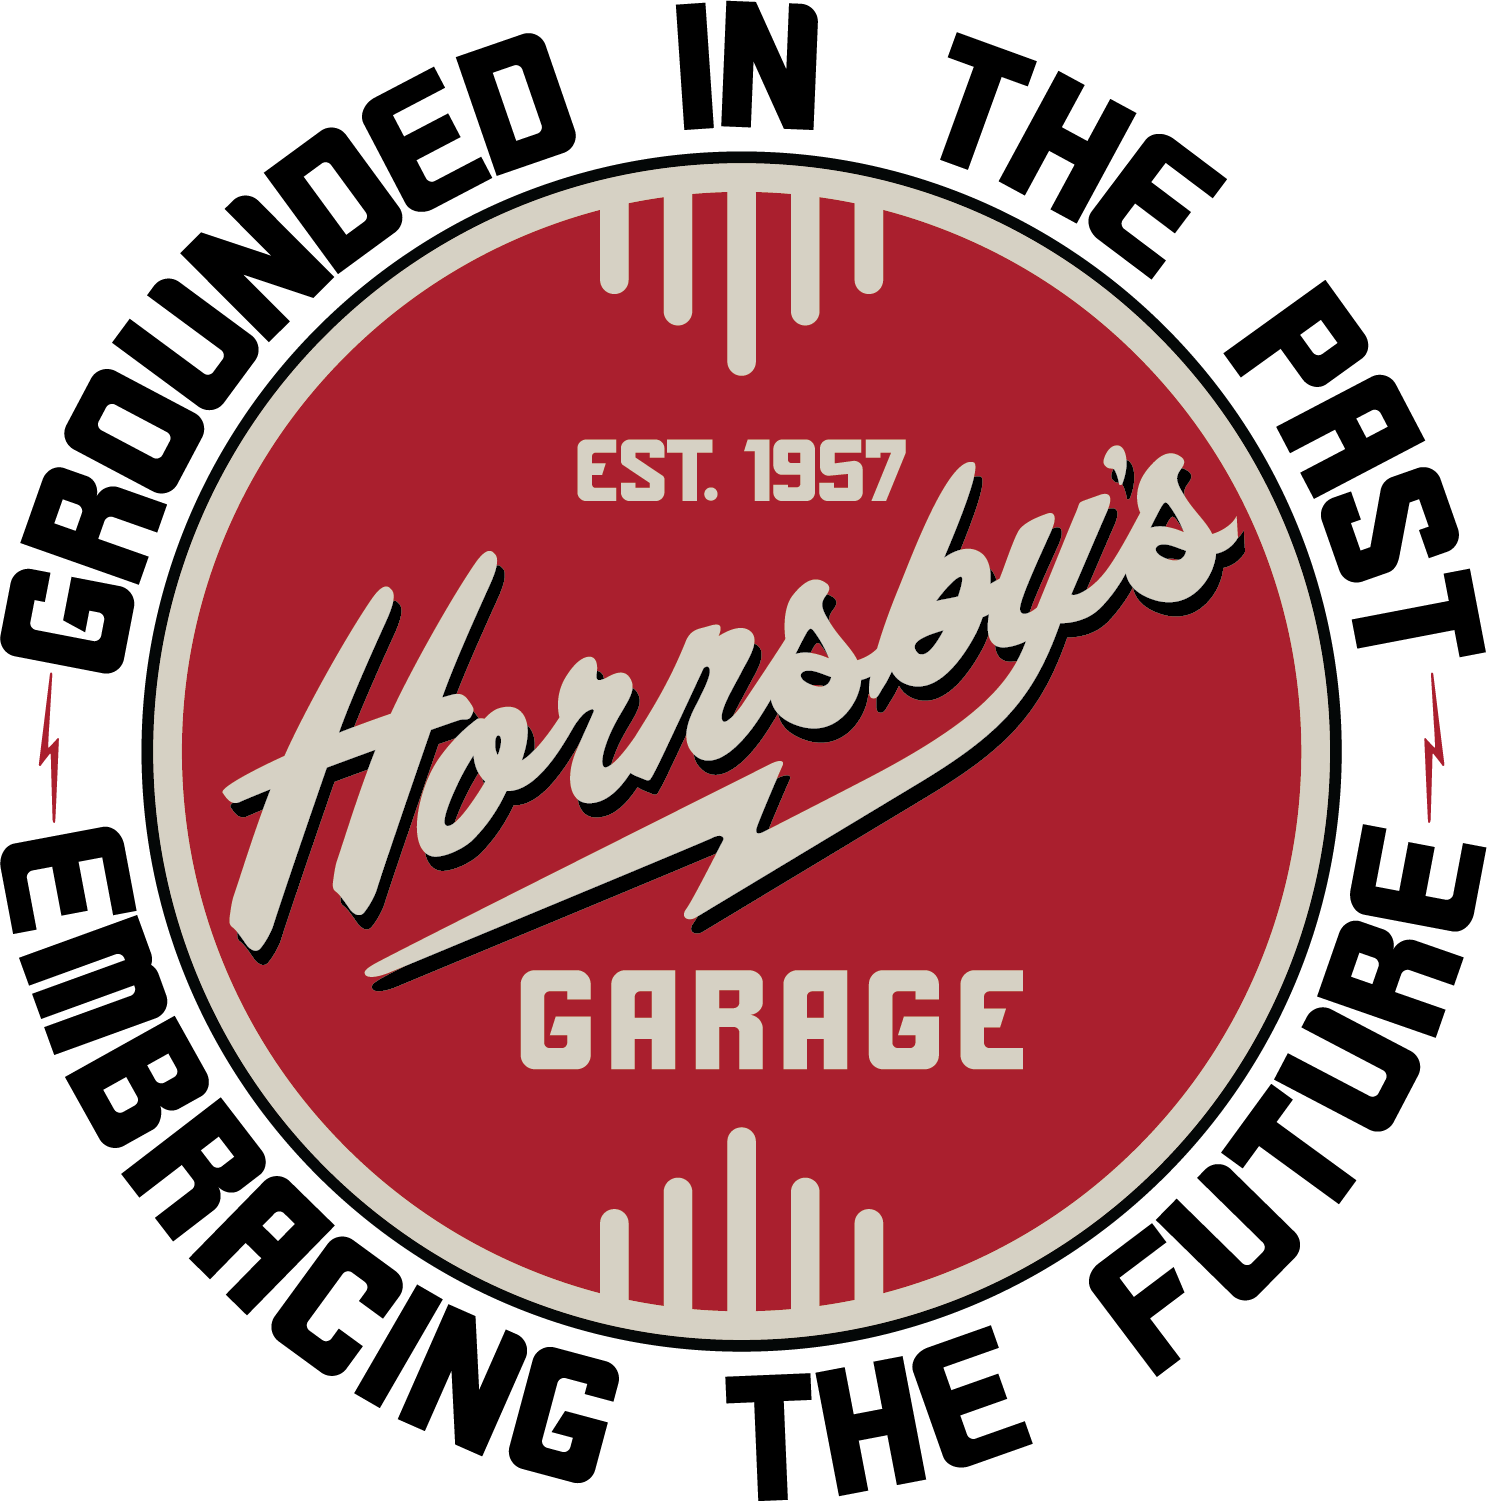 Hornsby's Garage